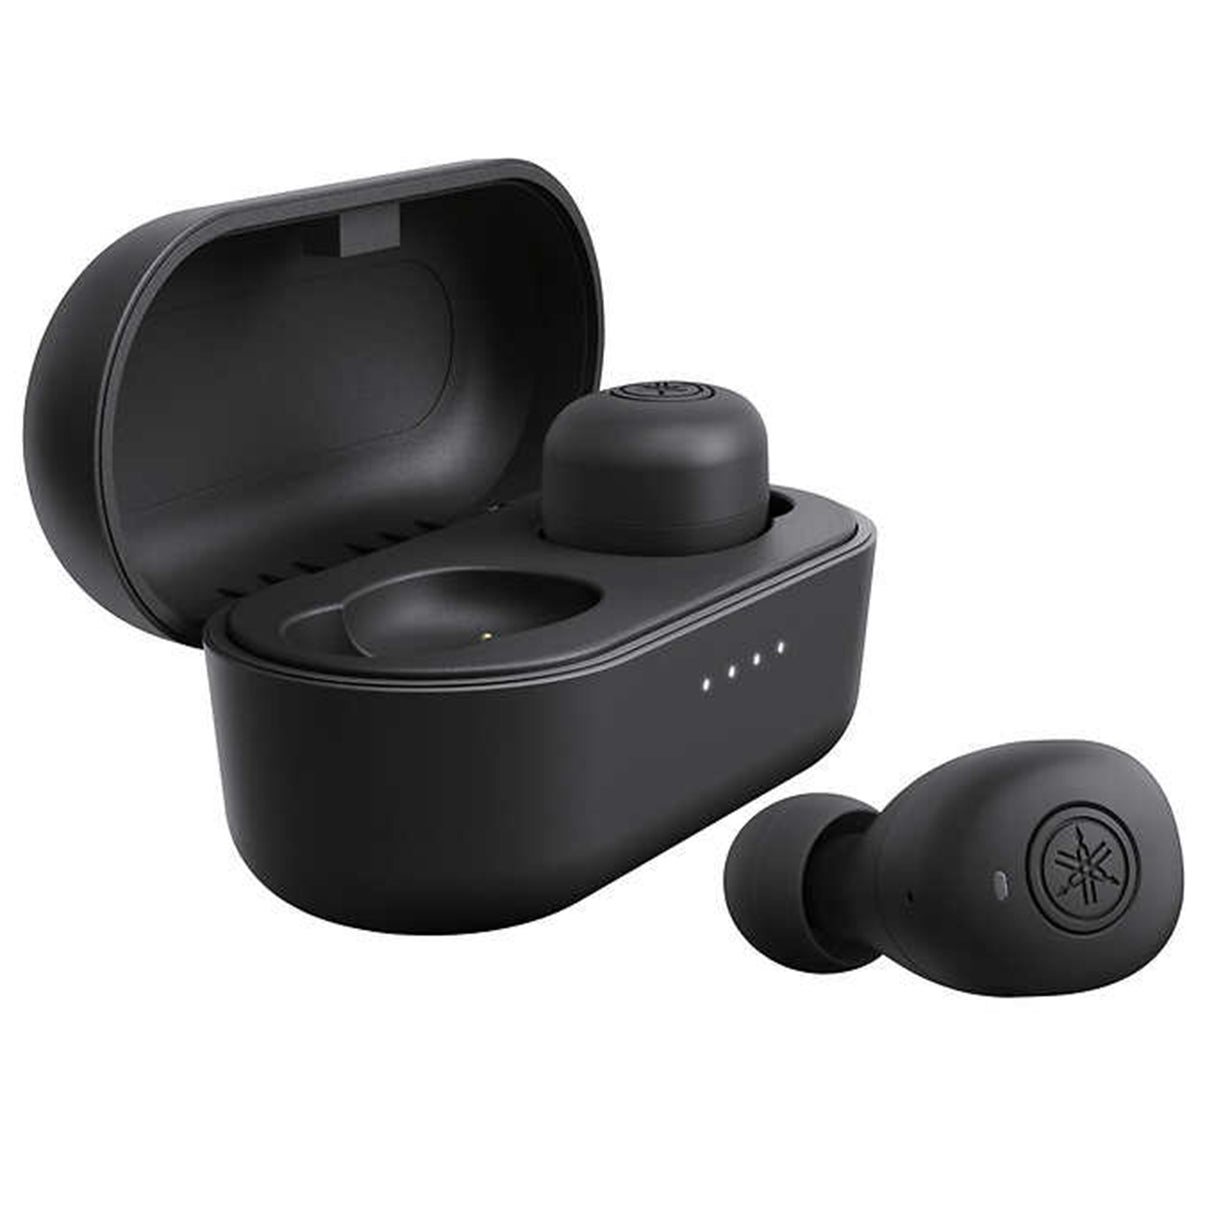 Yamaha TW-E3B - True Wireless Noise- Cancelling Bluetooth Earbuds (Black)